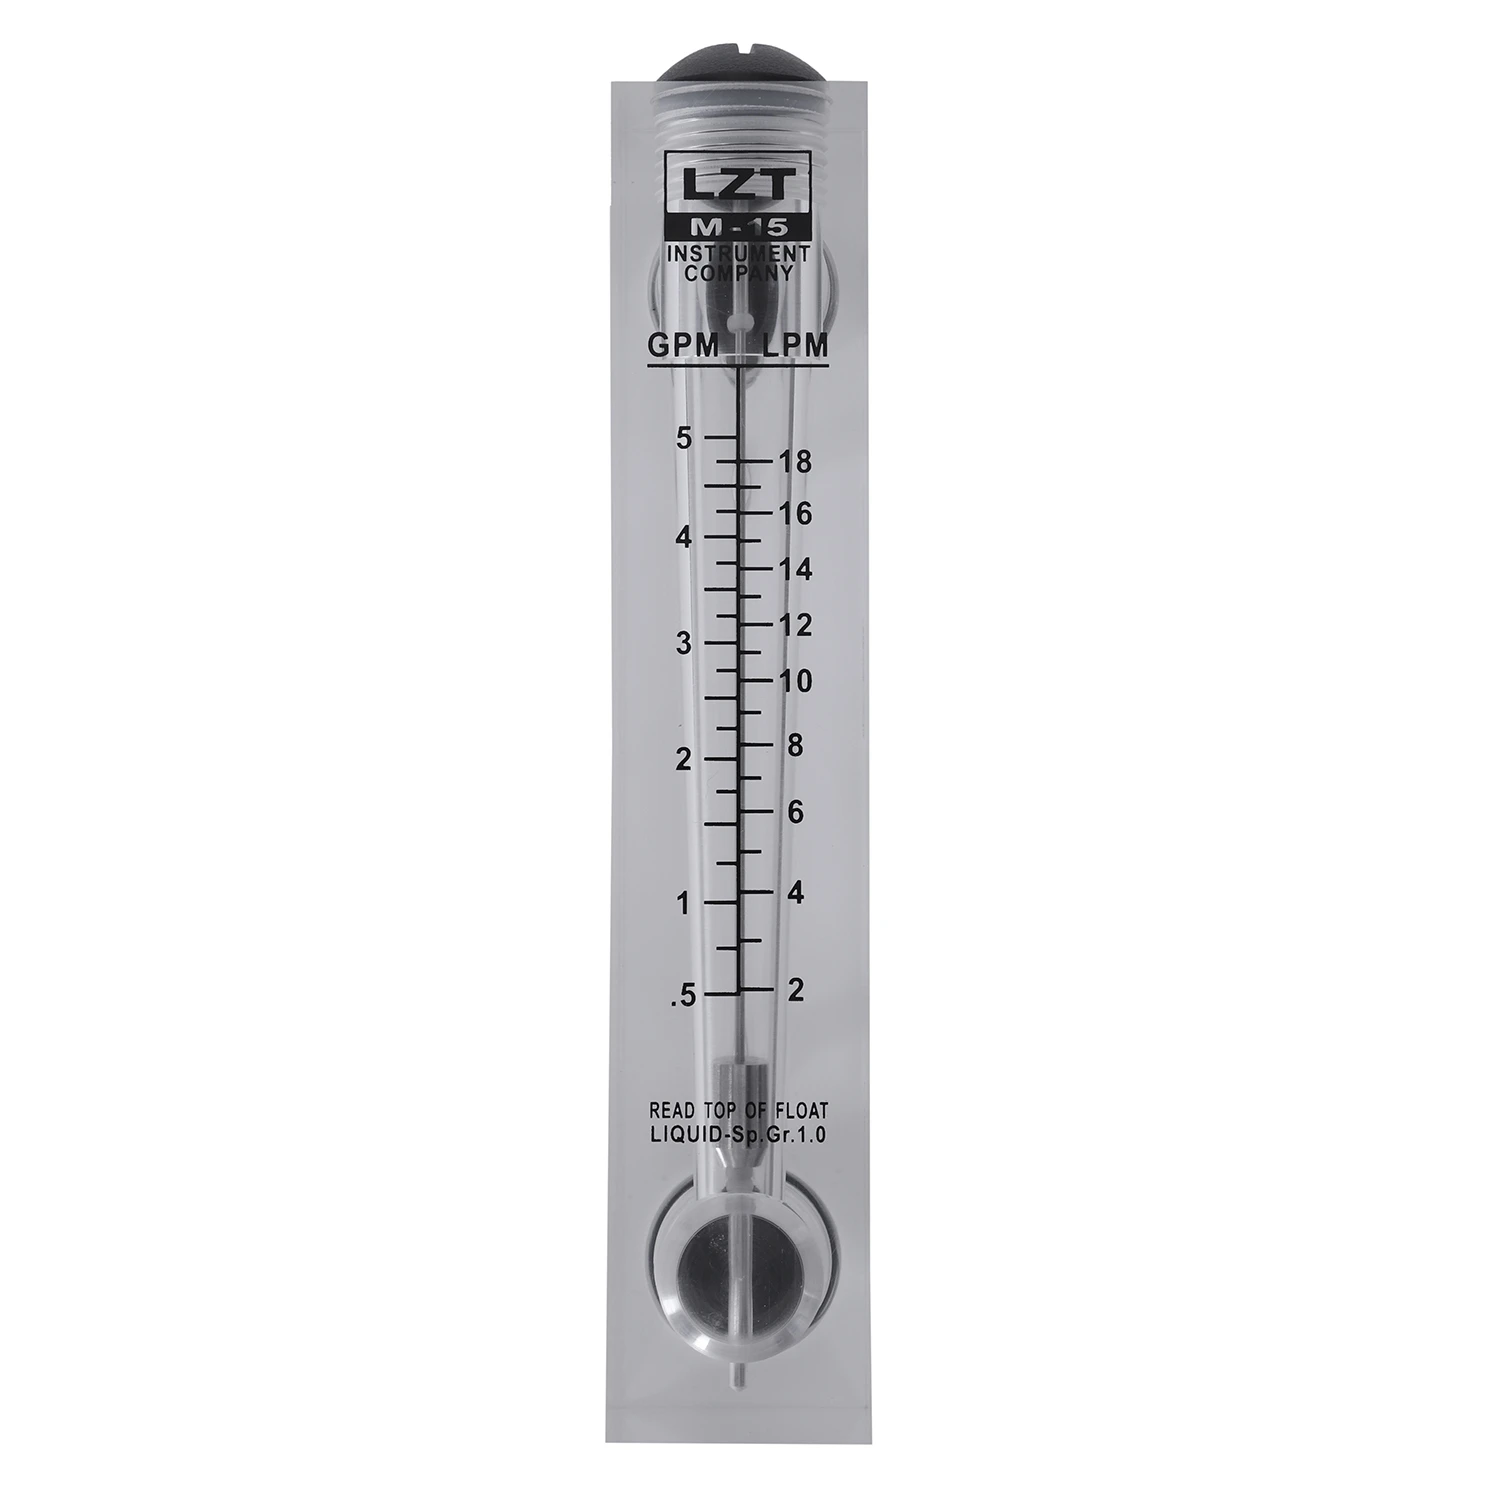 Расходомер типа крепления на панели для подачи воды 0,5-5 GPM 2-18 LPM